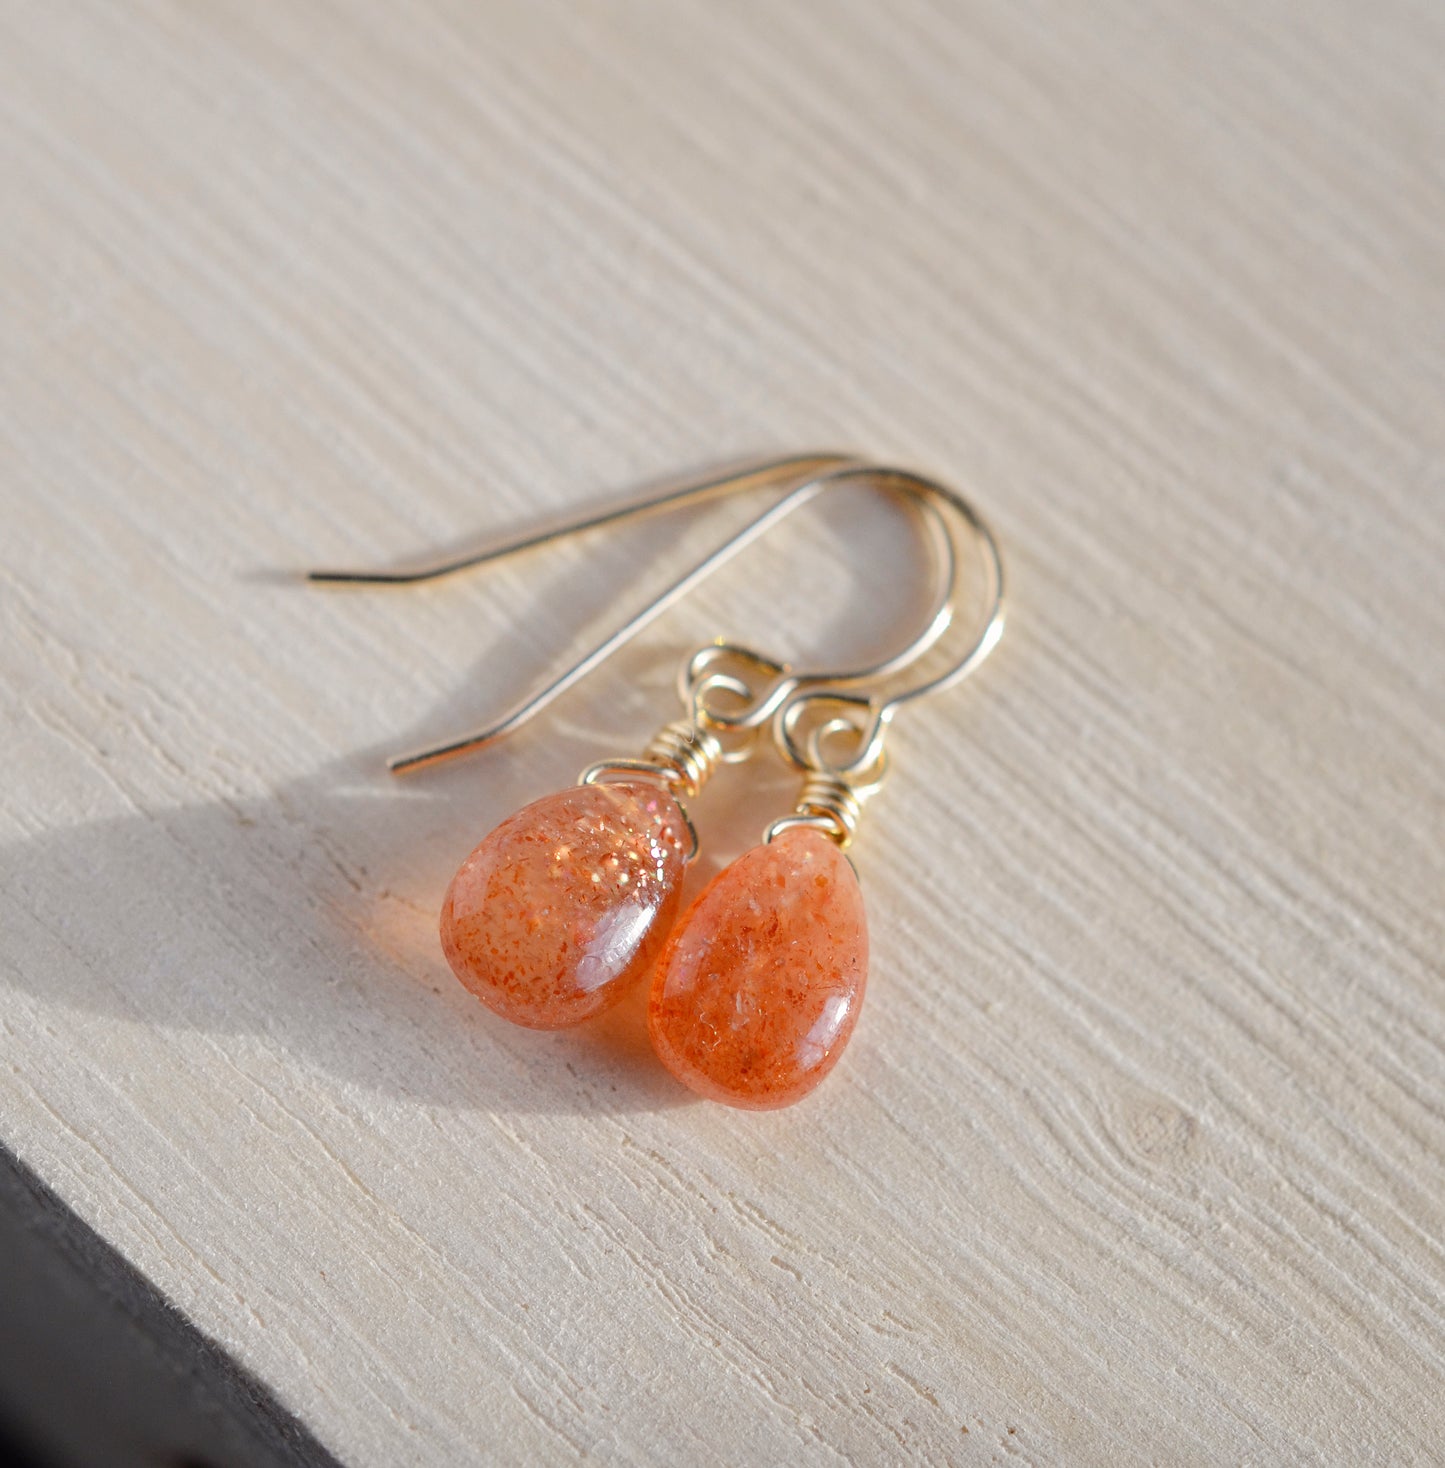 Genuine, smooth polished orange Sunstone teardrops suspended from 14k gold filled earwires.